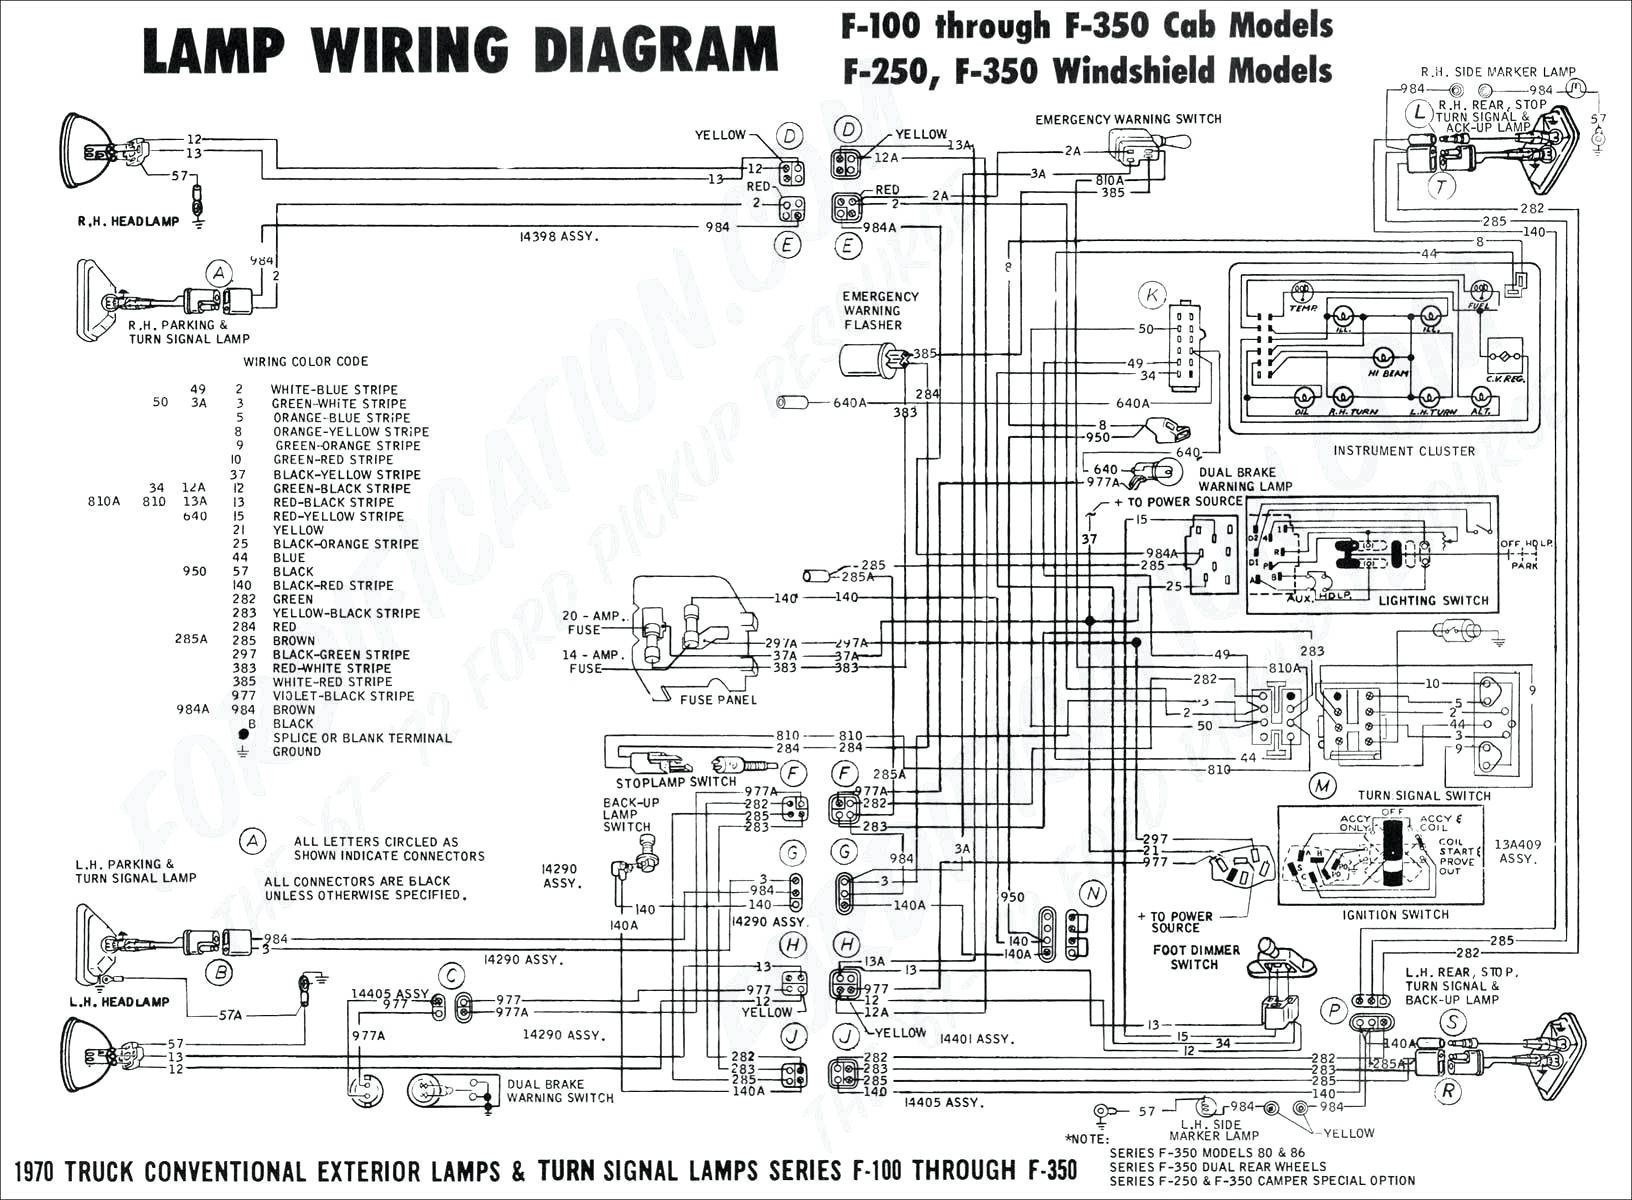 2007 Dodge Ram 1500 Radio Wiring Diagram Lv 2375] Ram 1500 Radio Wiring Diagram Wiring Diagram for Of 2007 Dodge Ram 1500 Radio Wiring Diagram